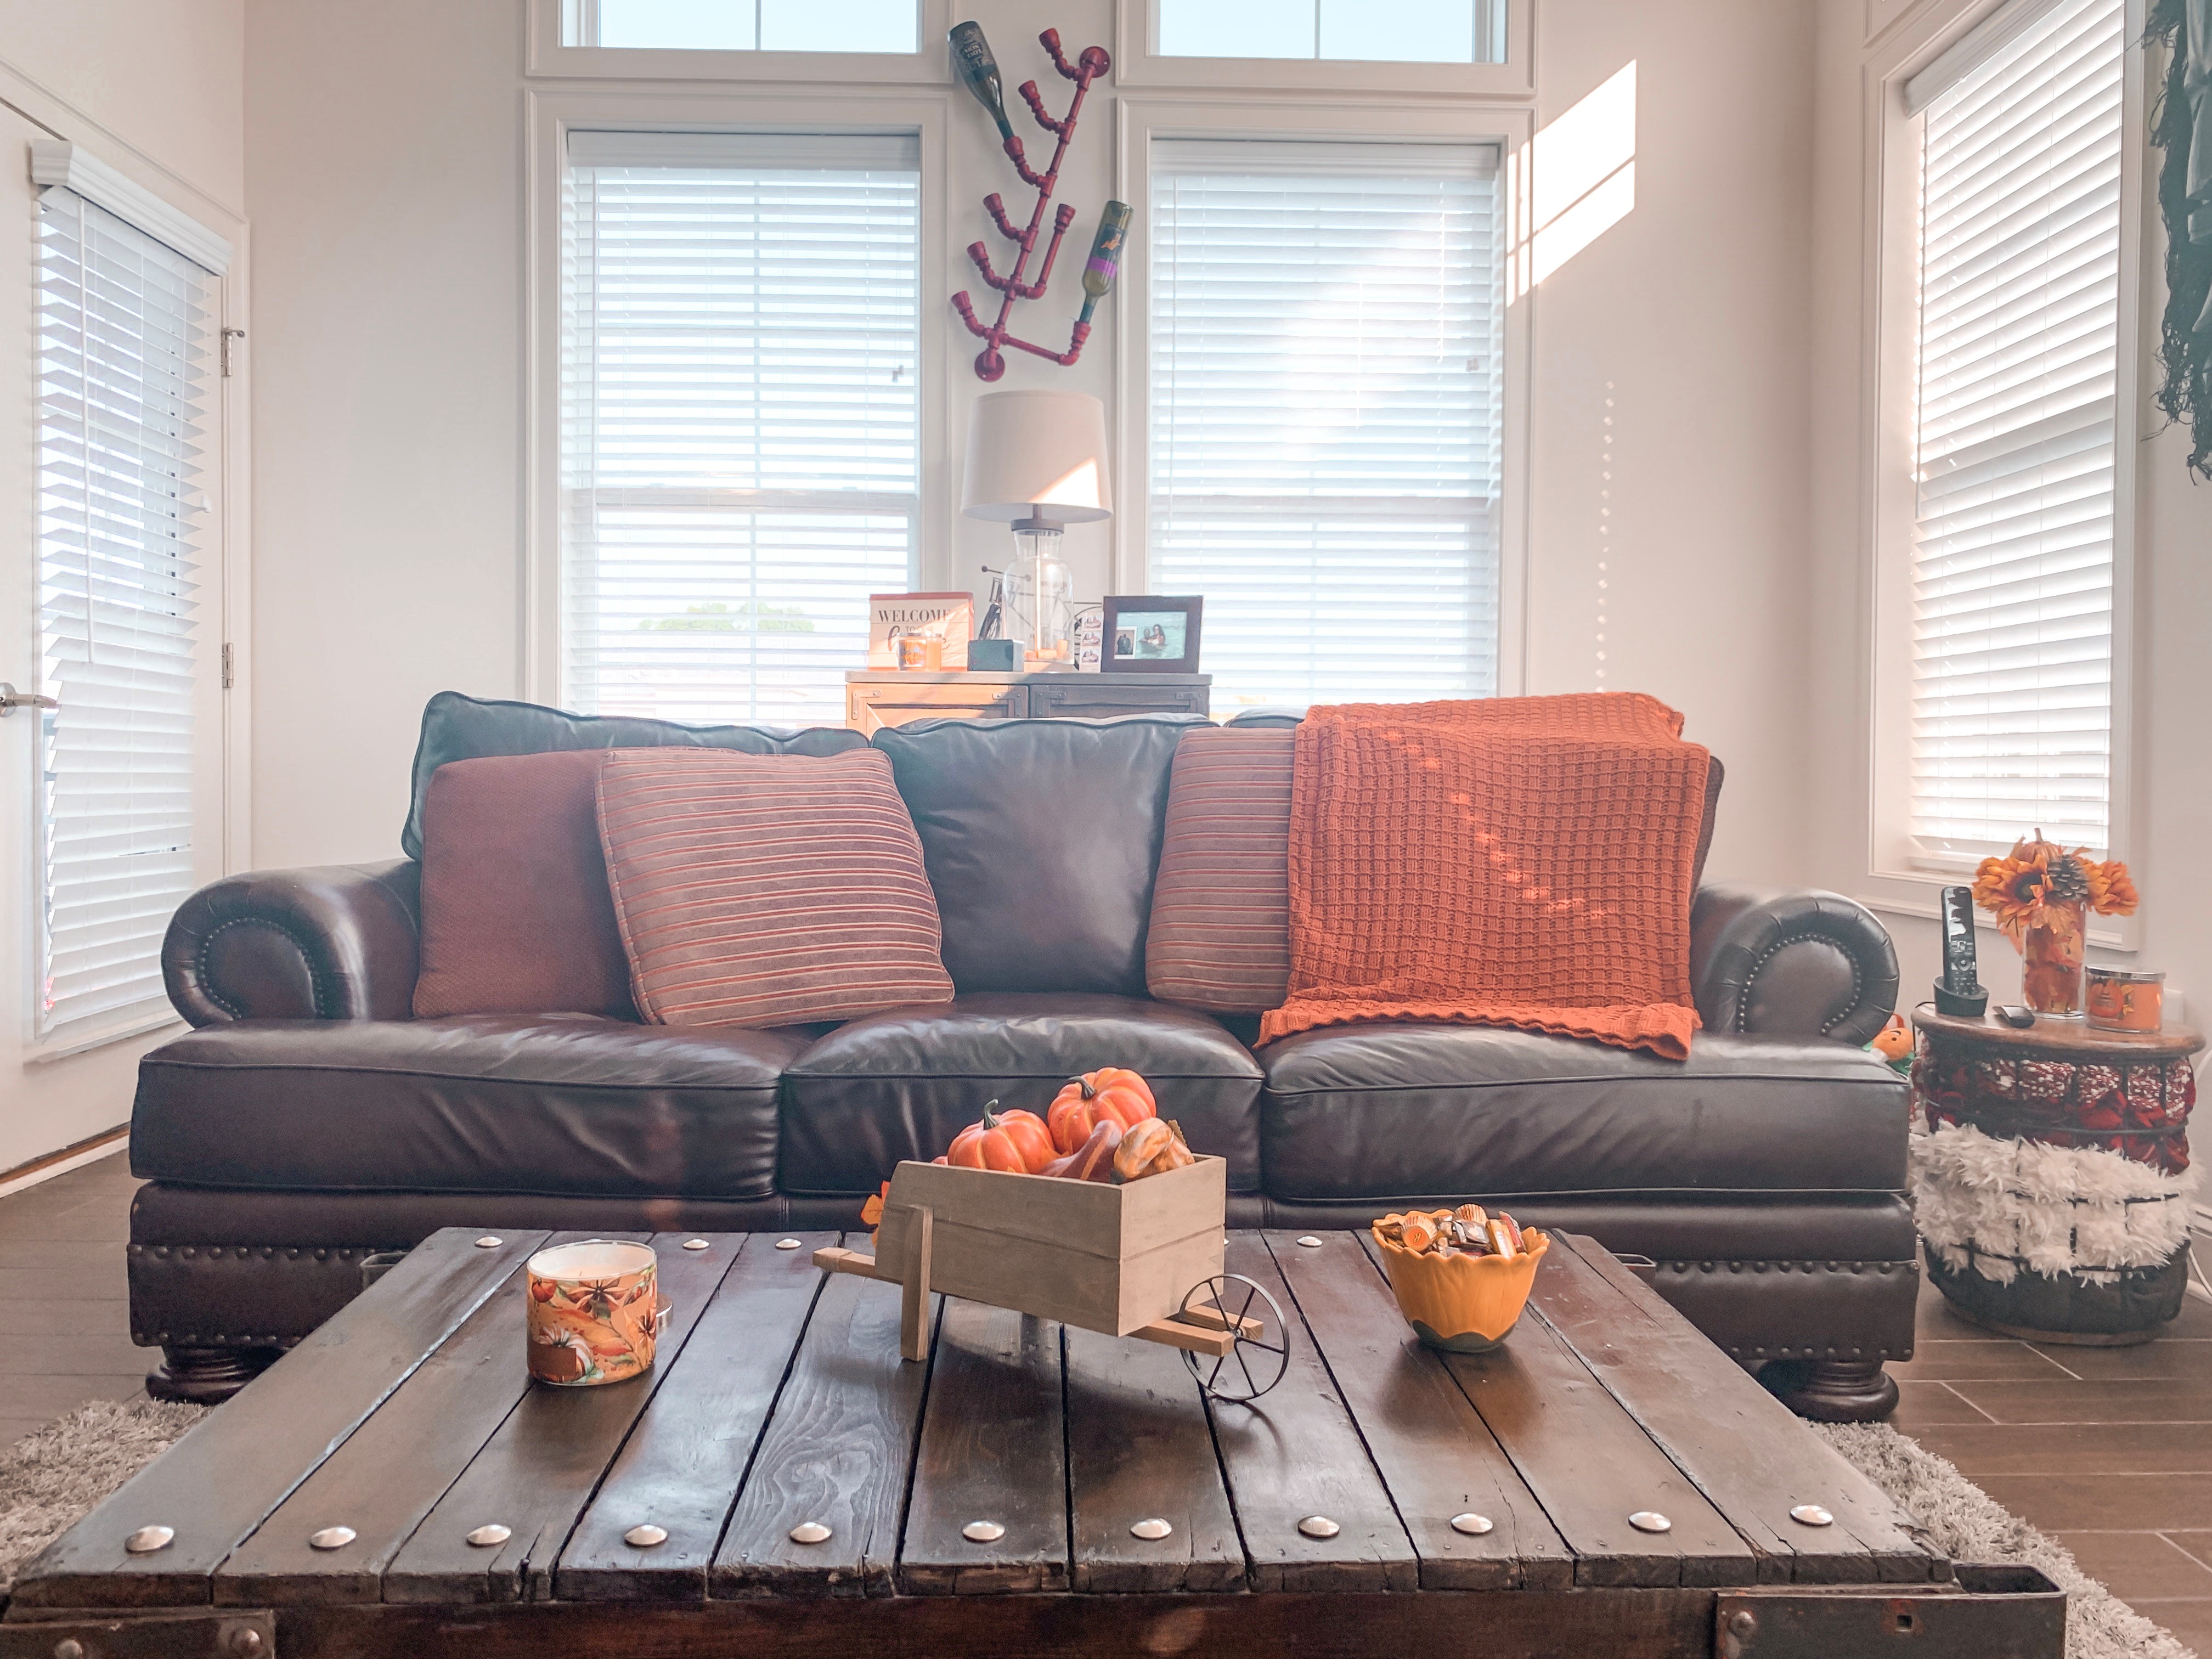 Living Room Fall Decor- Fall Home Decor On A Budget | Kat Viana